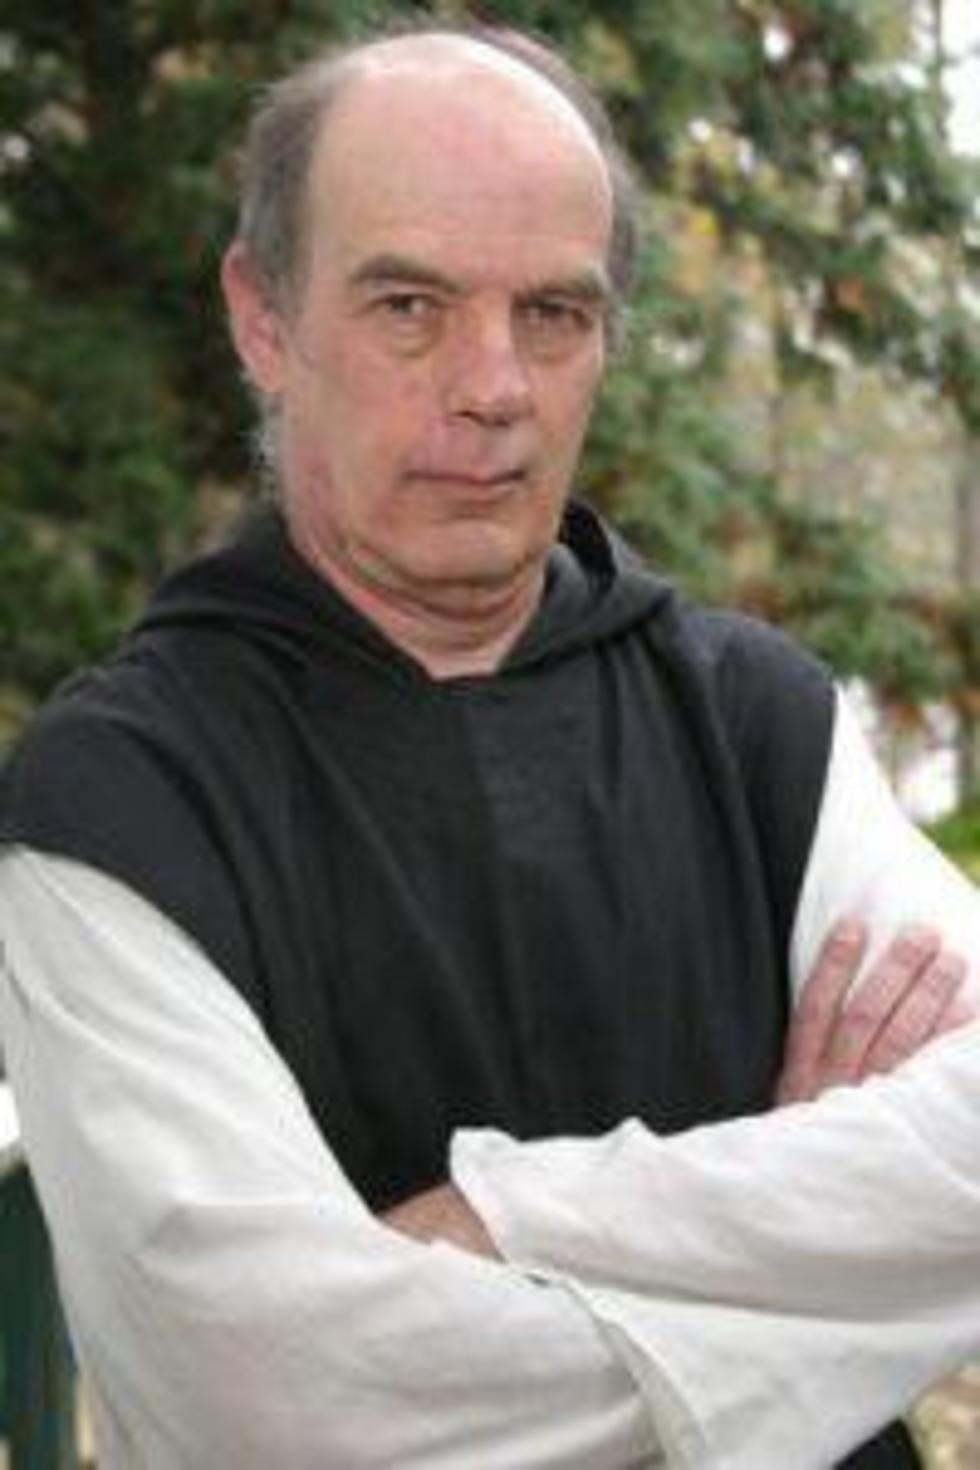 Obituary: The Rev. James Stephen Behrens